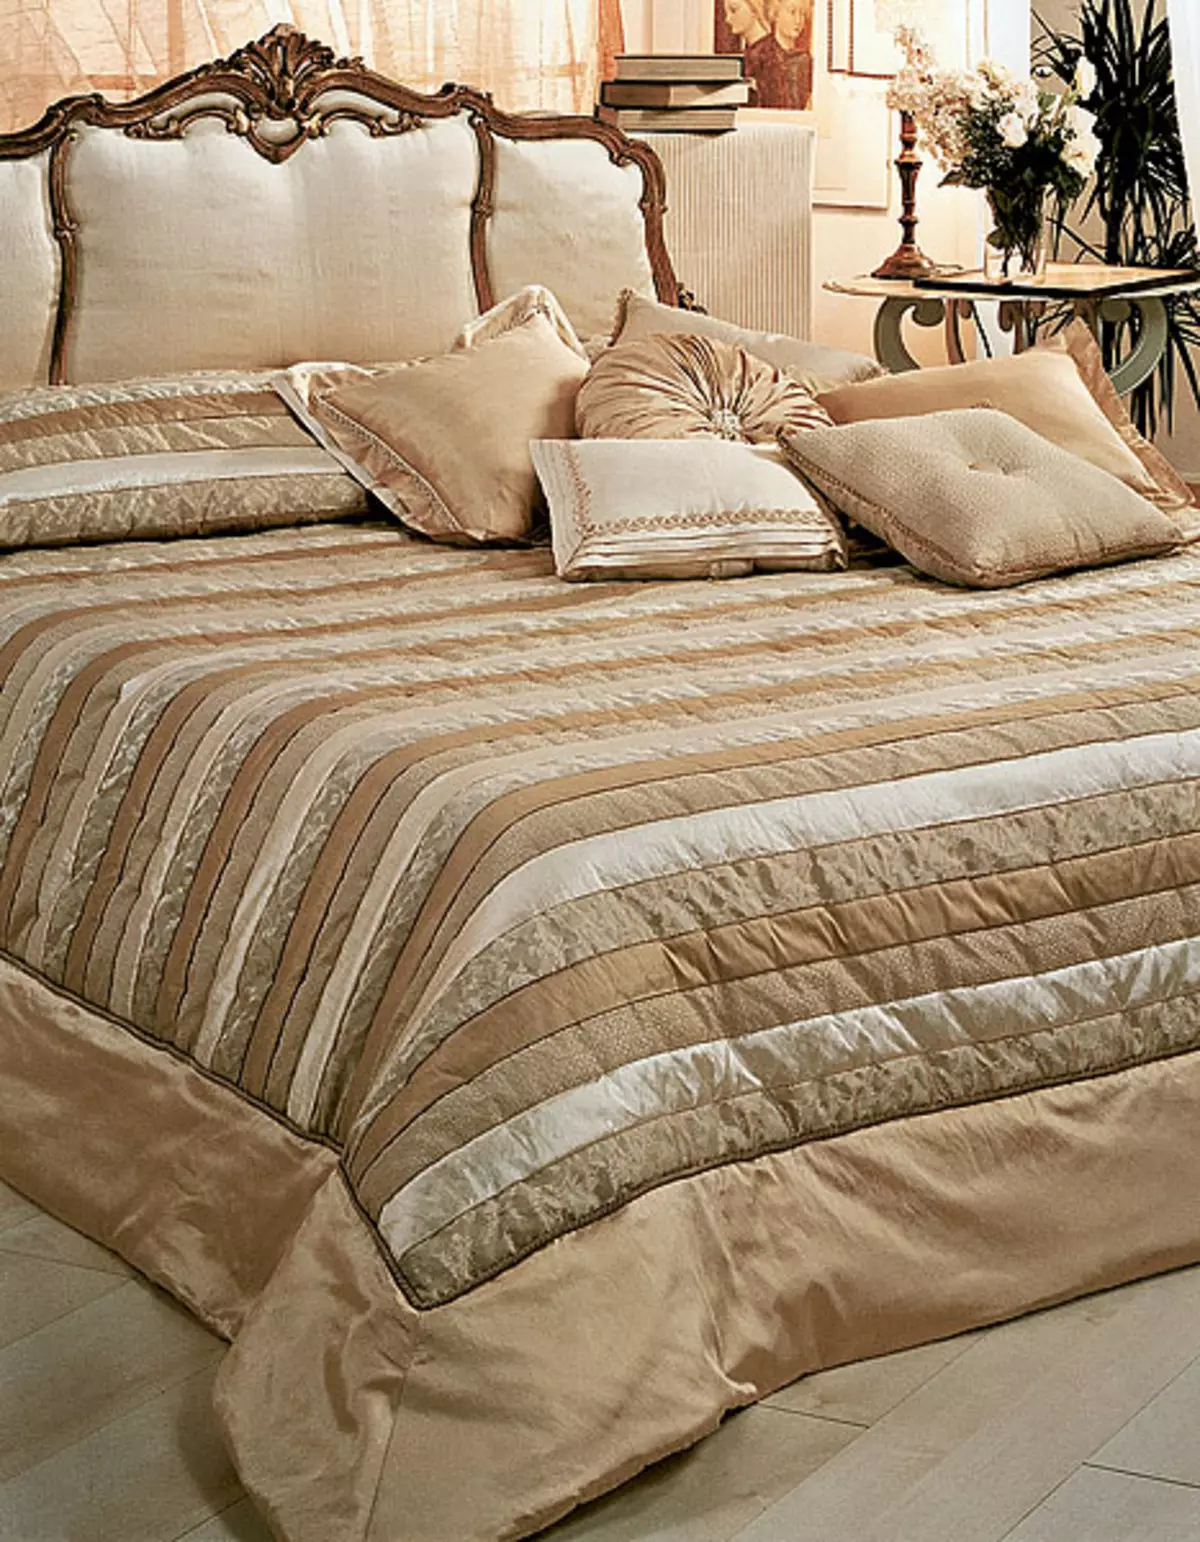 Fashionable bedspread